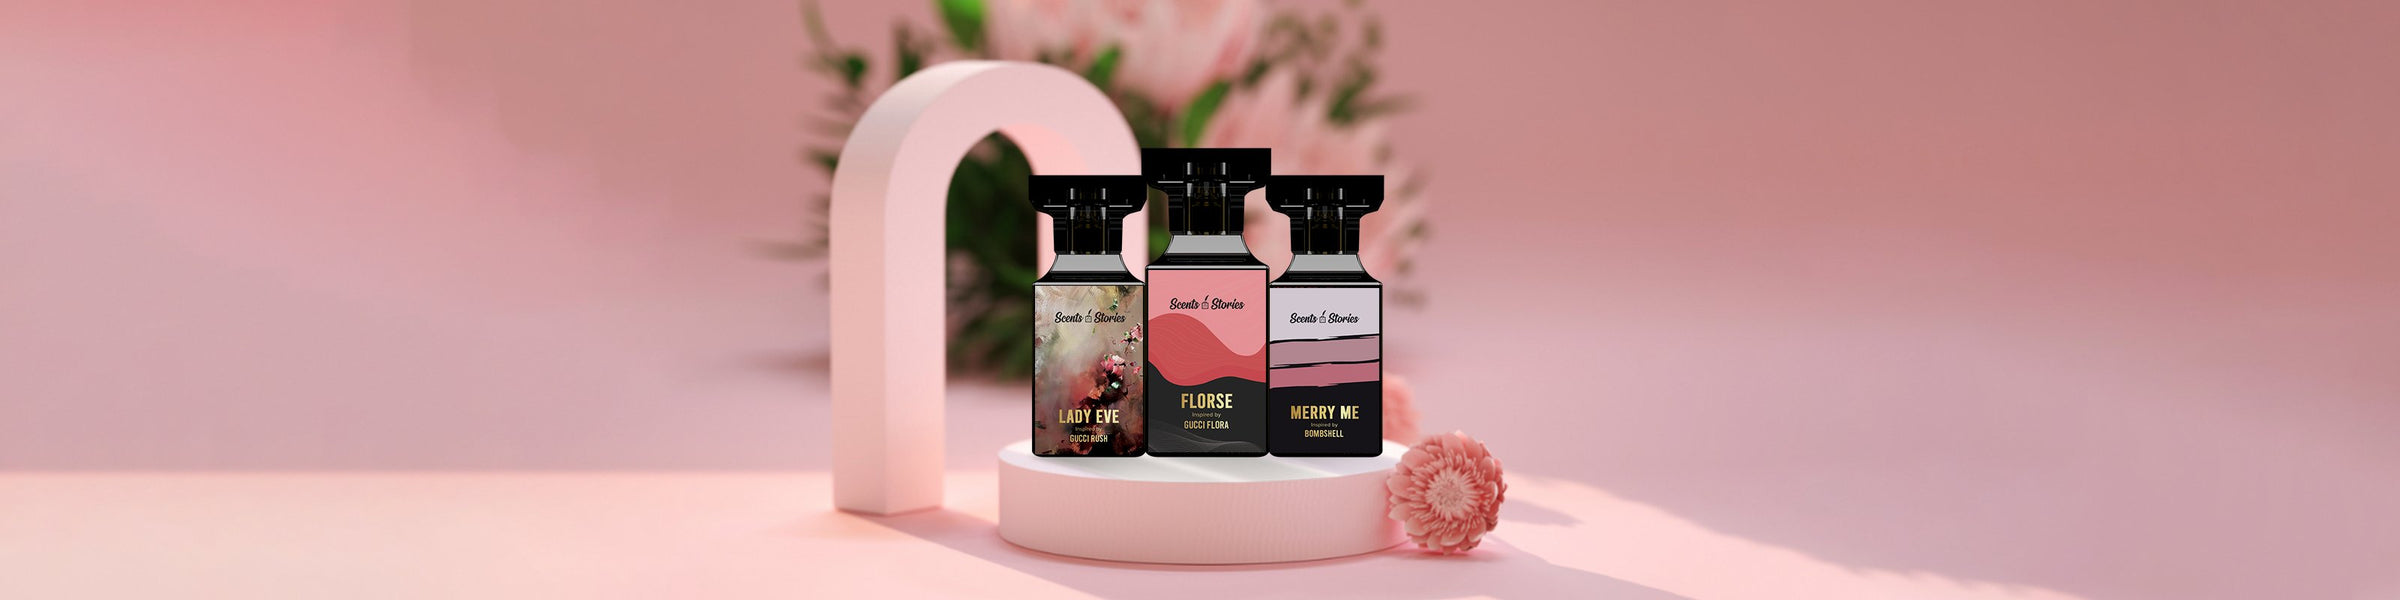 Best Selling Perfume for Women